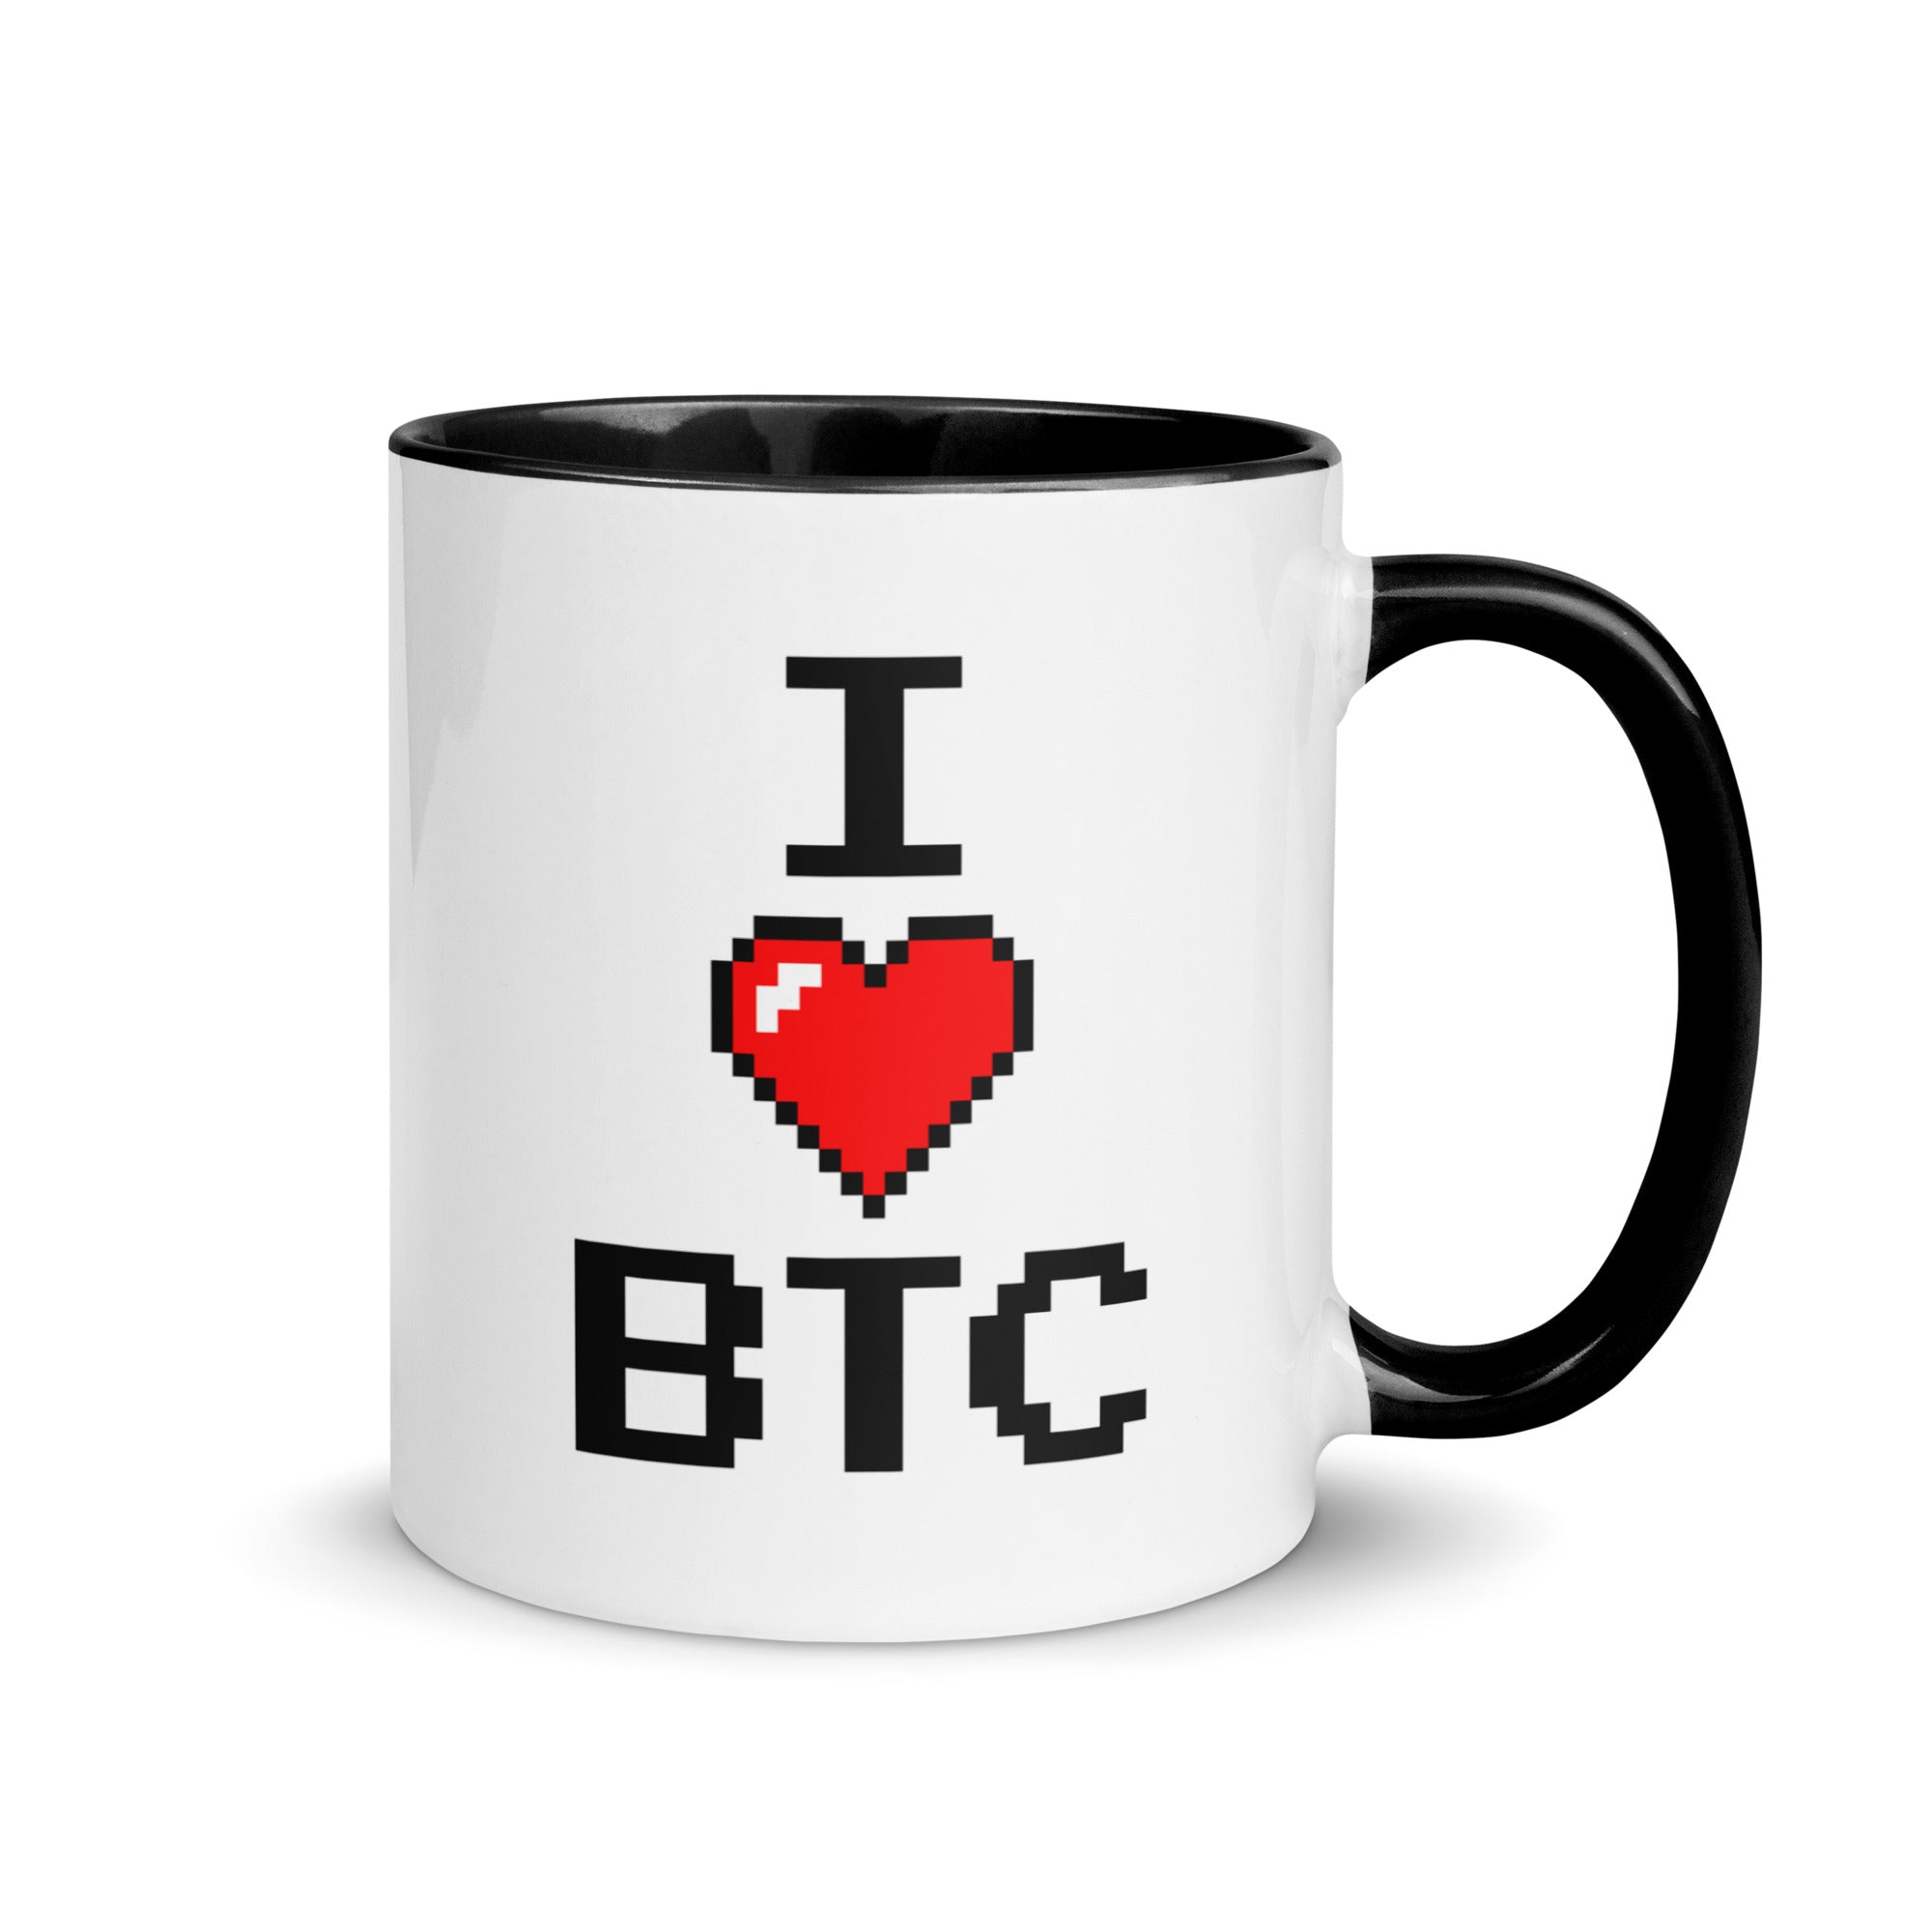 Bitcoin merchandise - I Love BTC Mug. Right handle view.